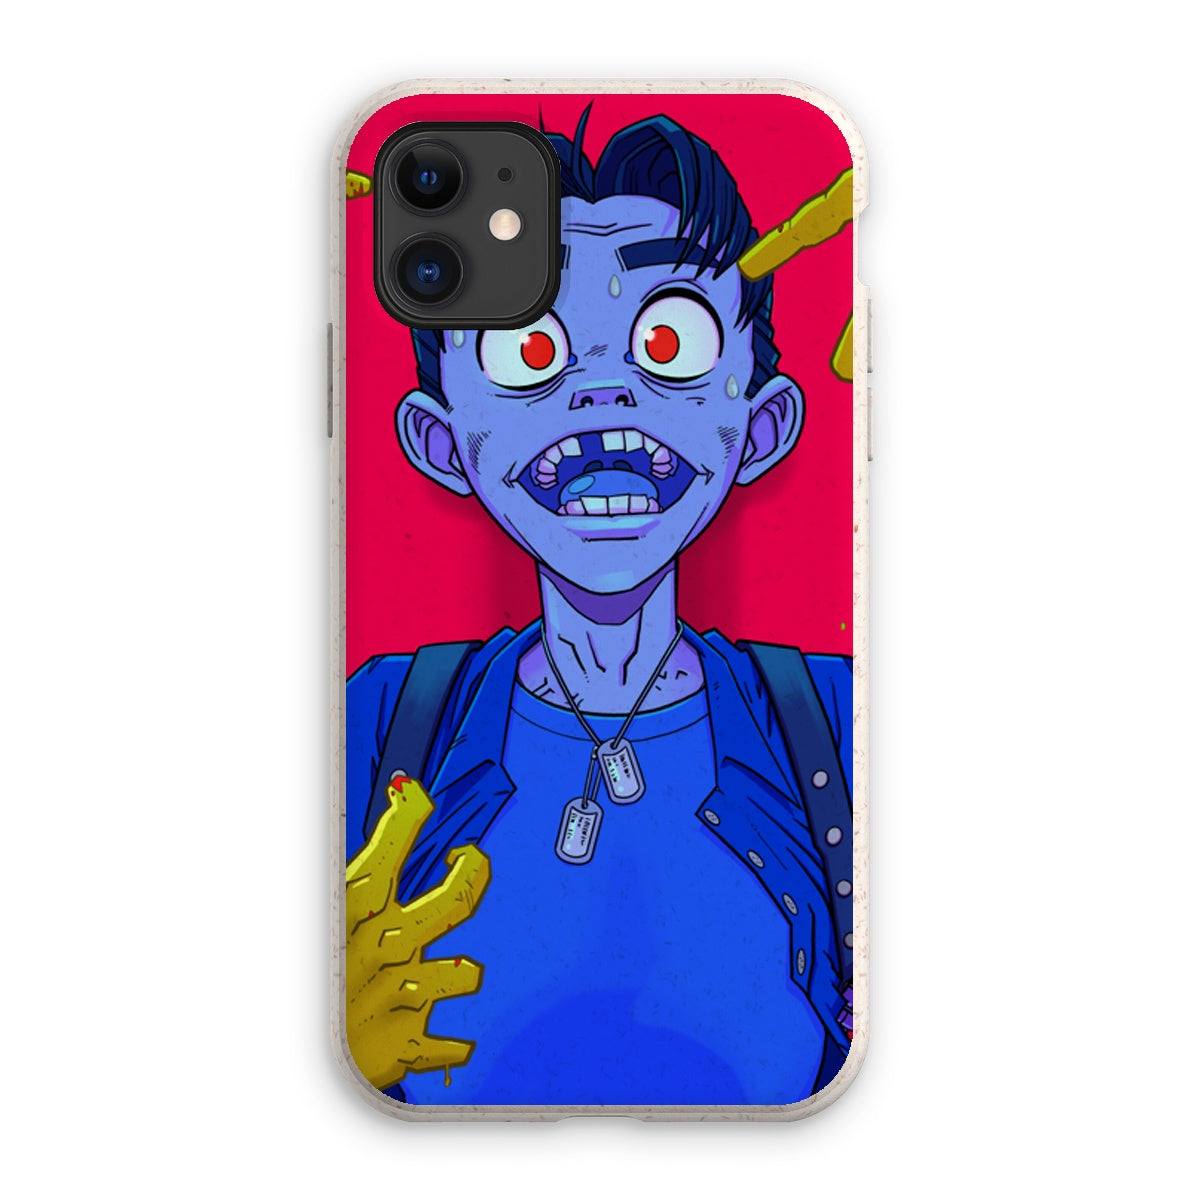 Unique and cool Gorillaz-style zombie phone case illustration